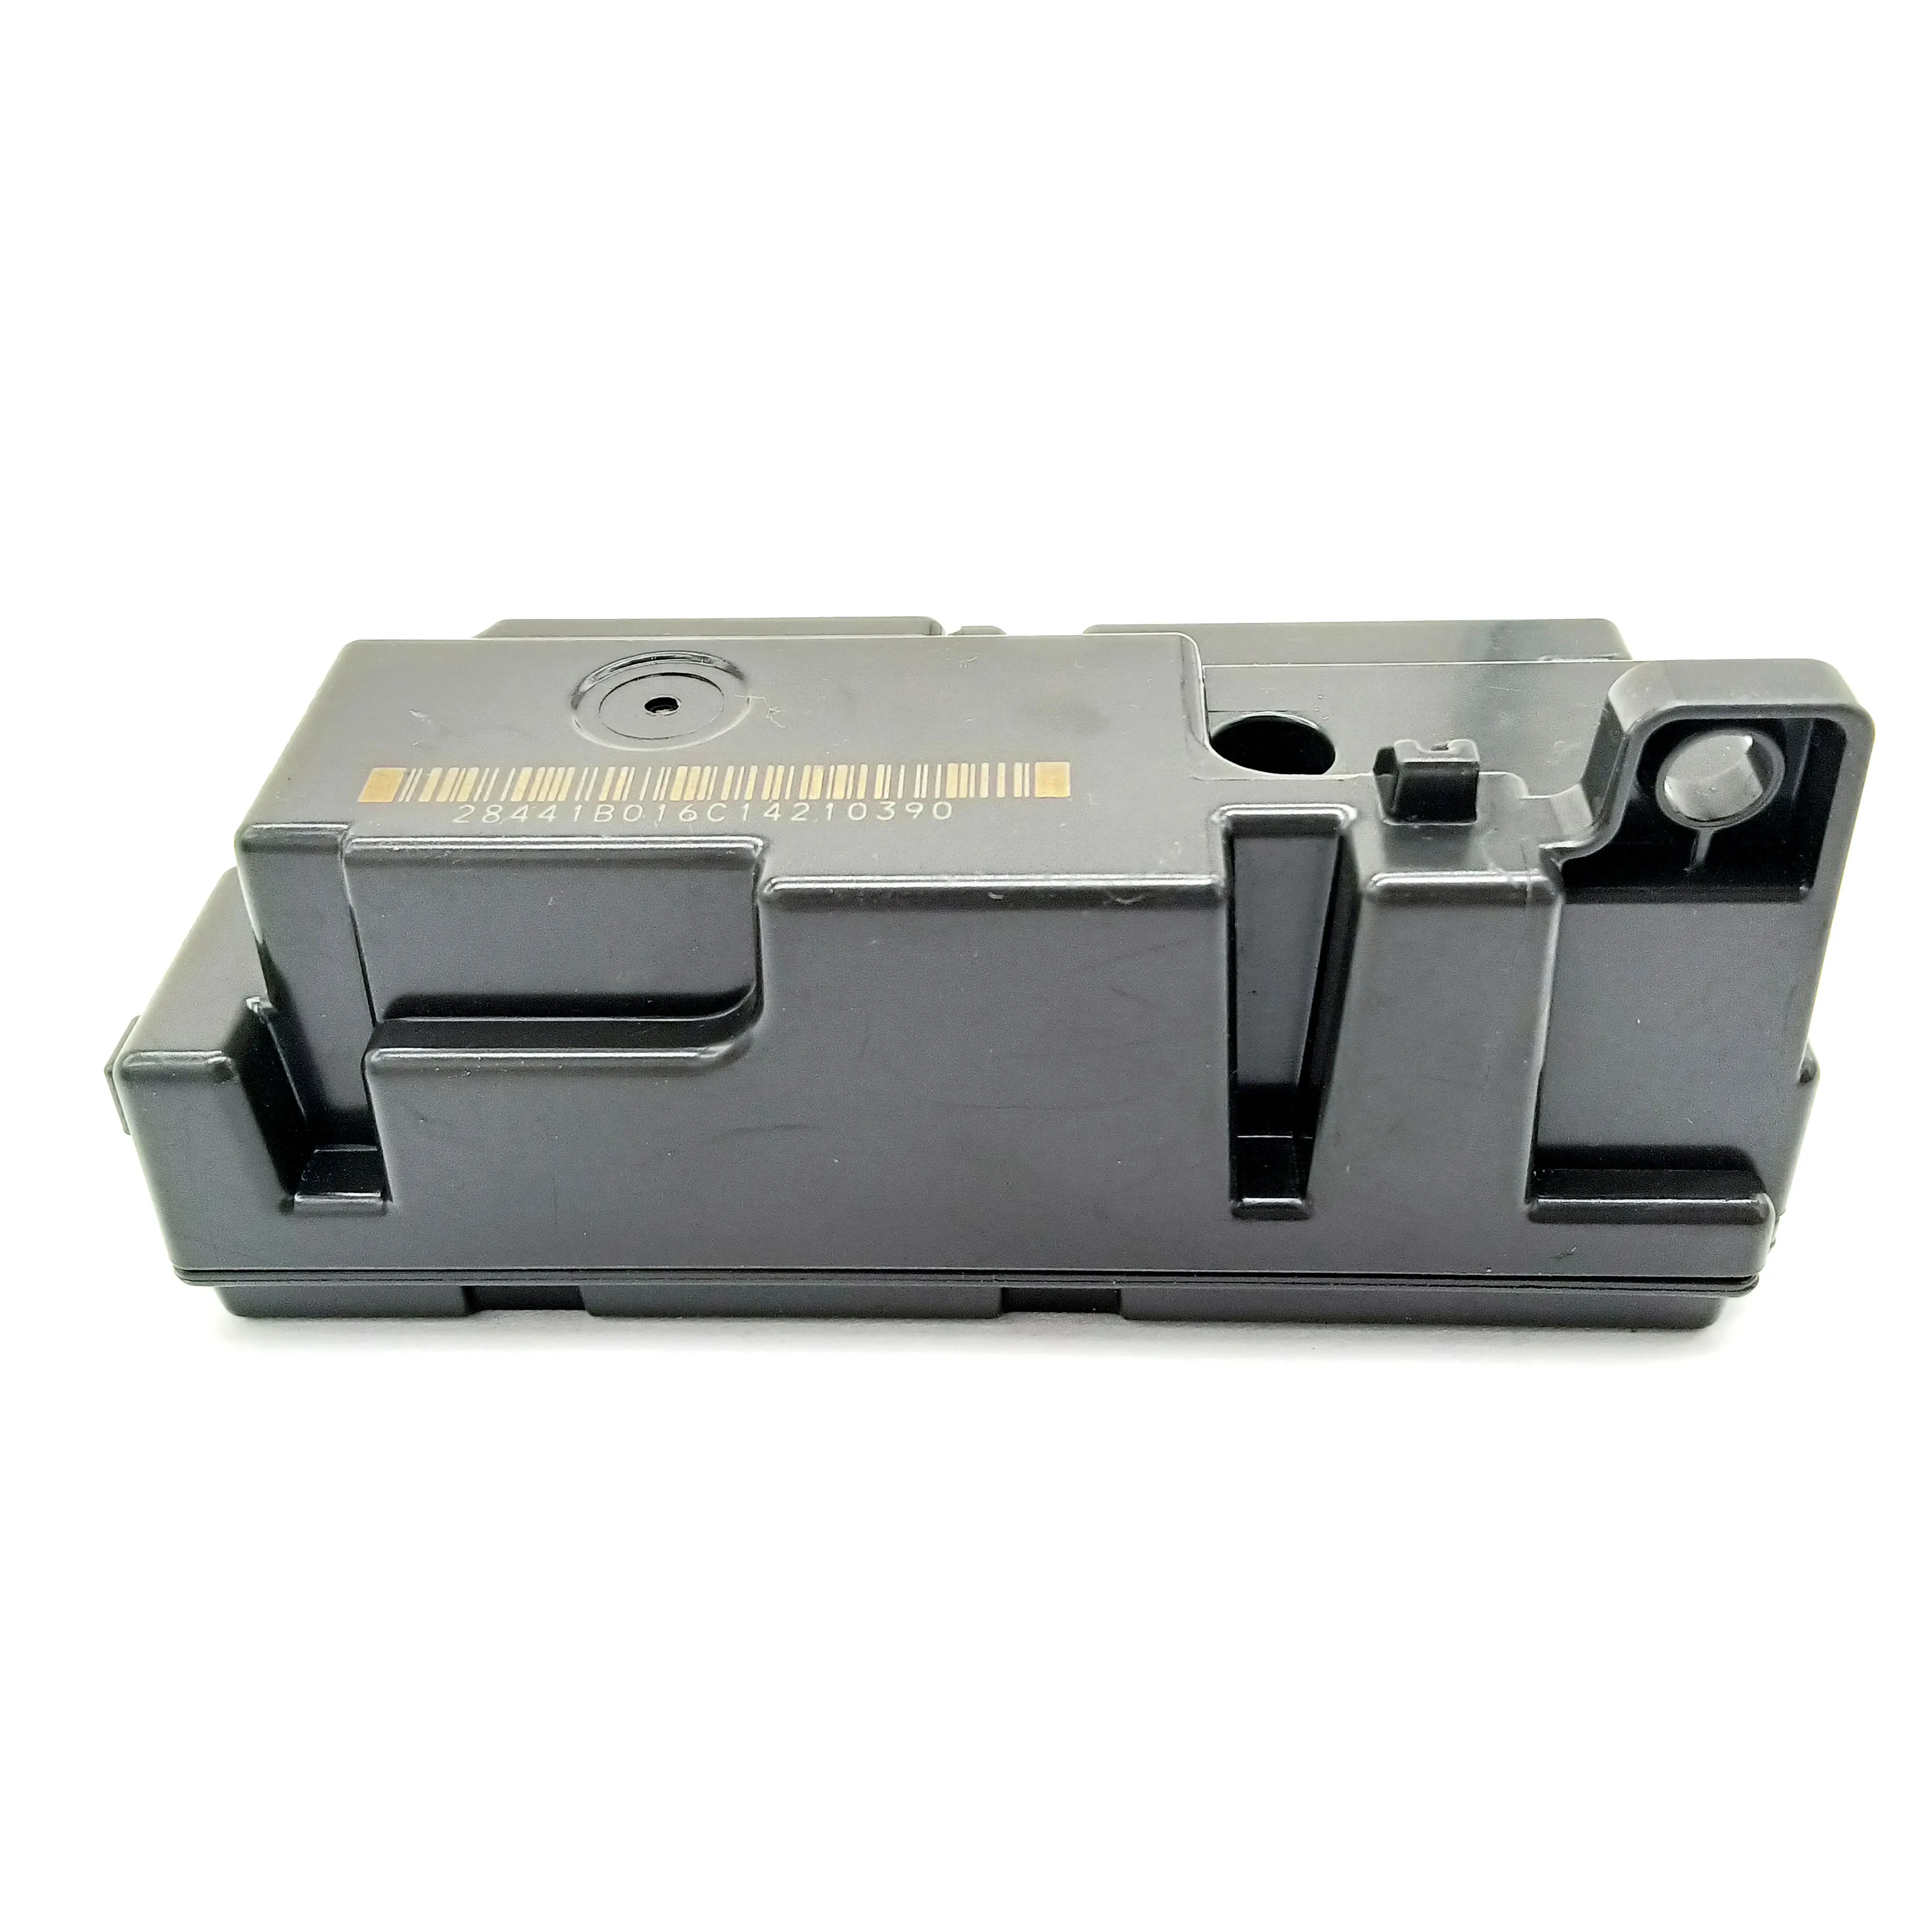 

Power Supply Adapter k30352 Fits For Canon PIXMA TS3120 MG2922 MG2520 MG2522 IP2820 TS202 MG3020 MG2520S IP2820S MX492 MG3022